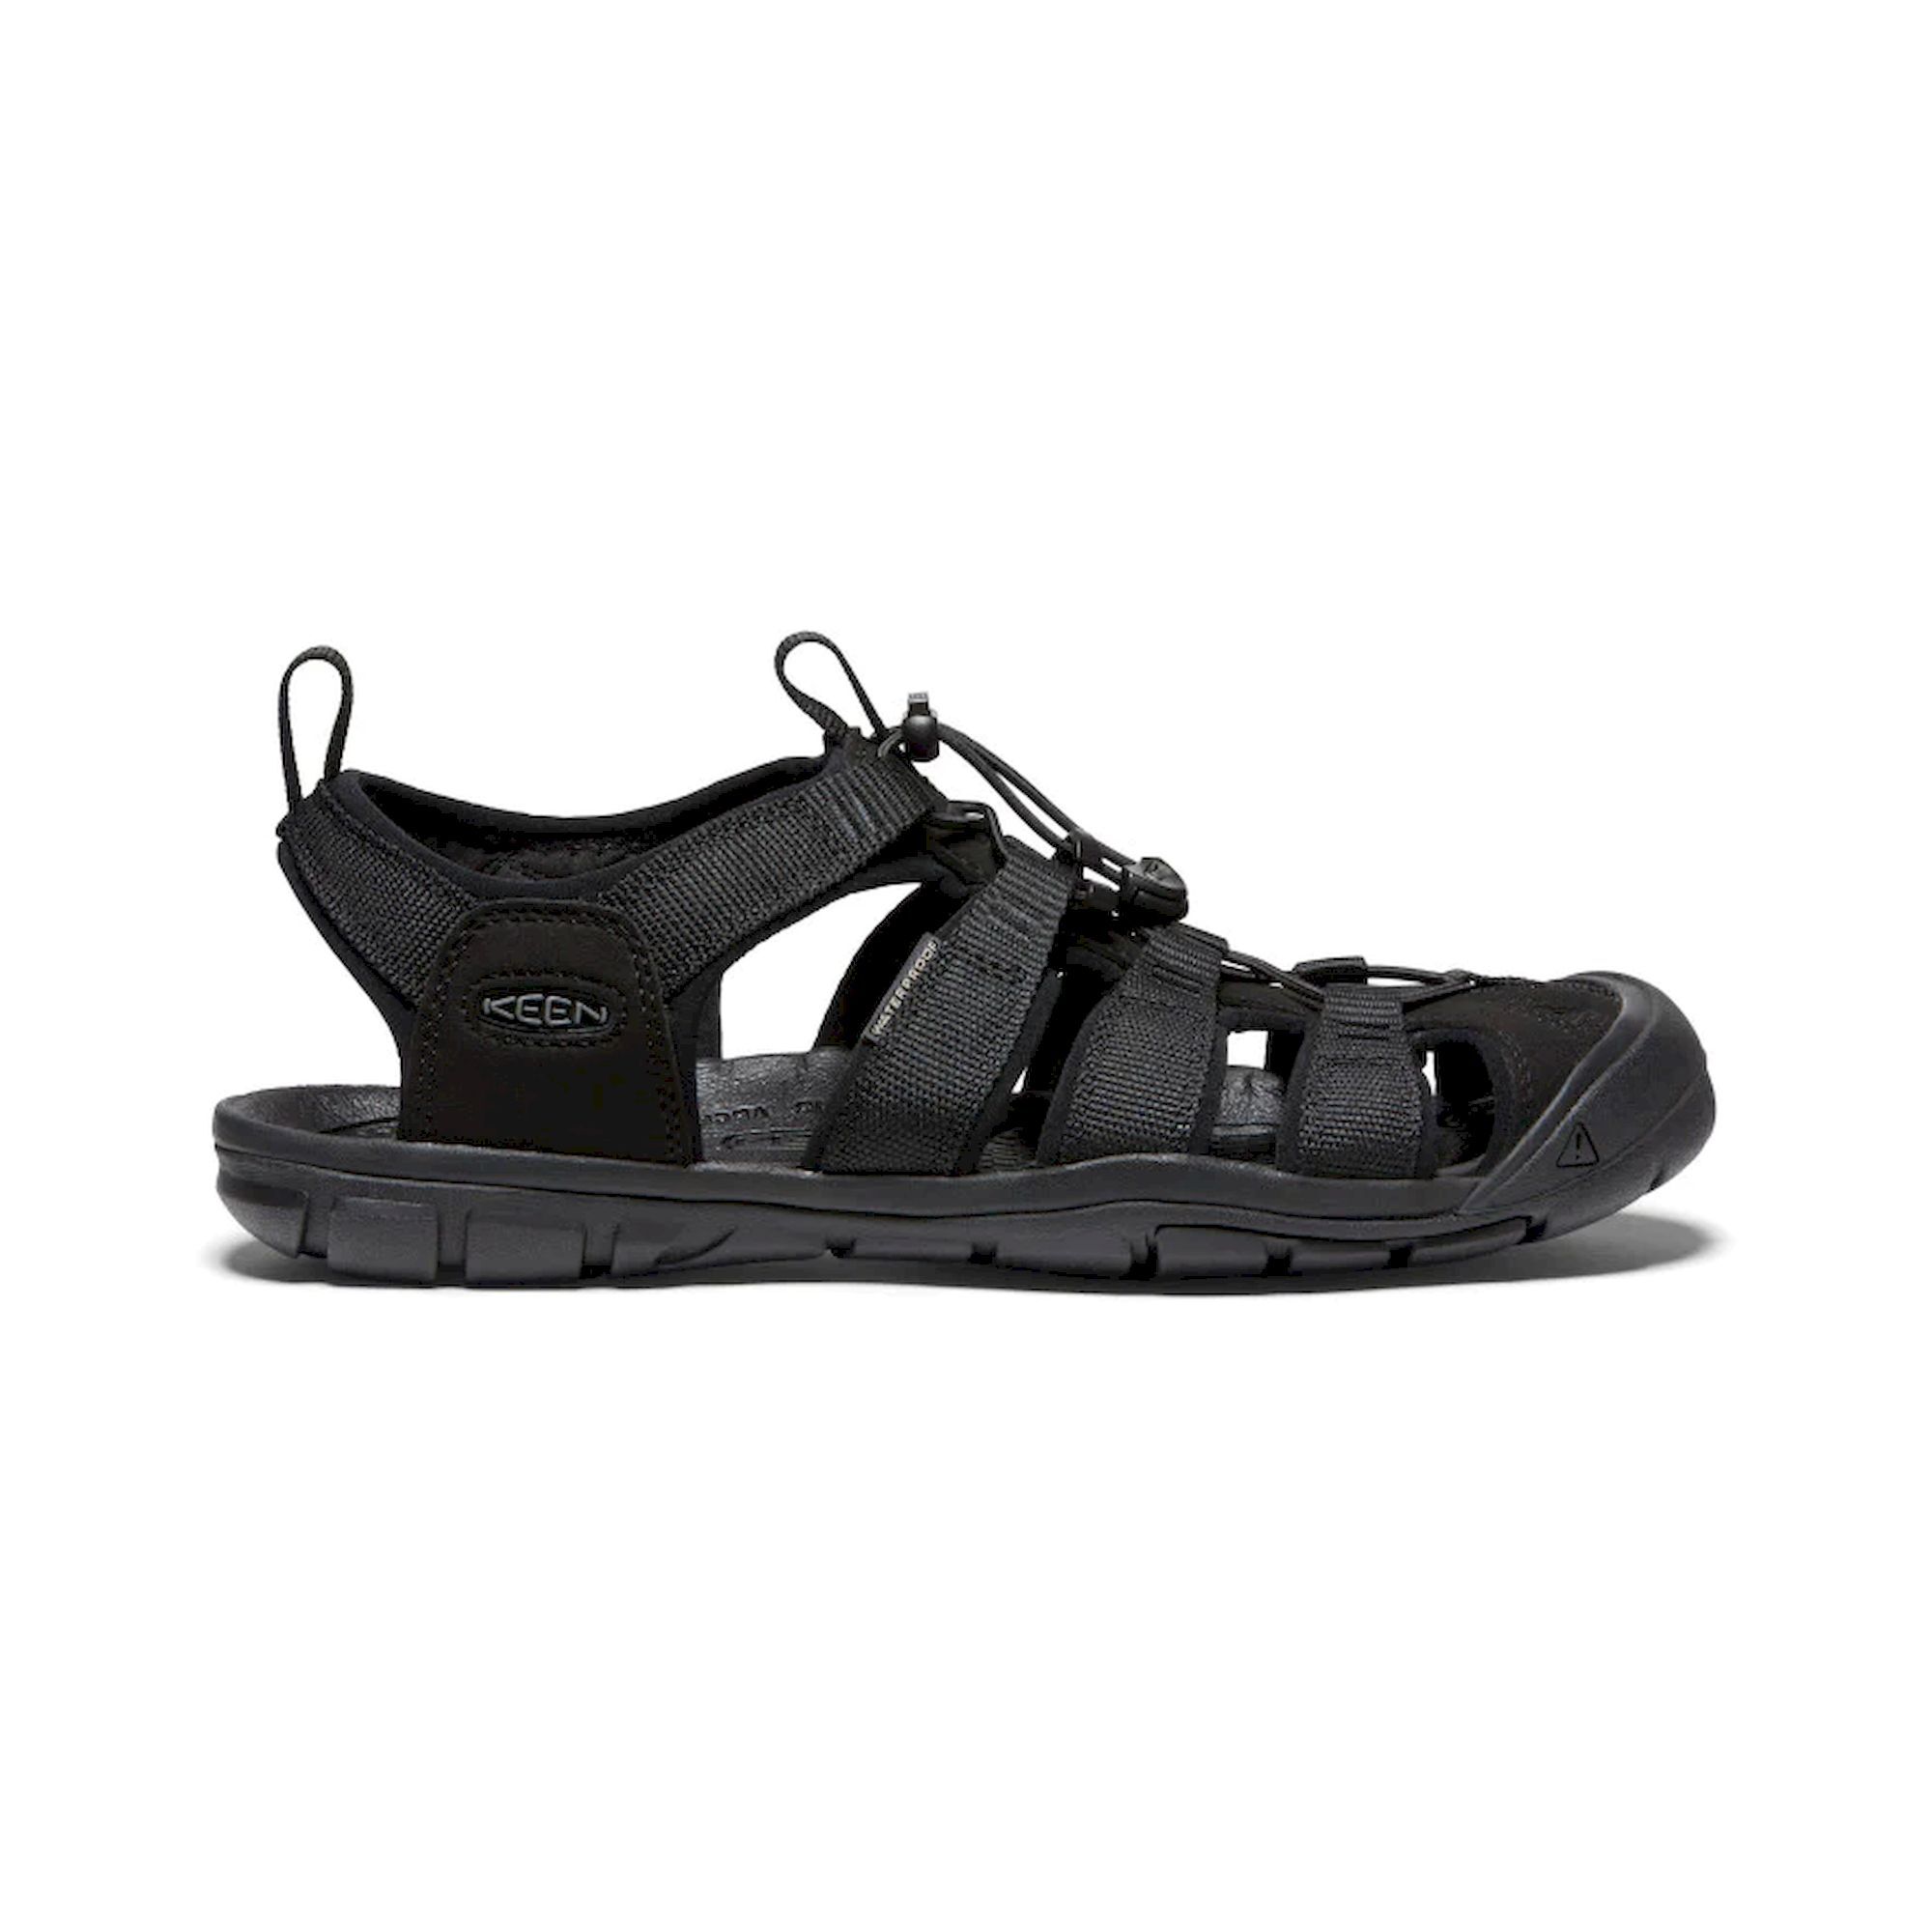 Keen Clearwater CNX - Walking sandals - Men's